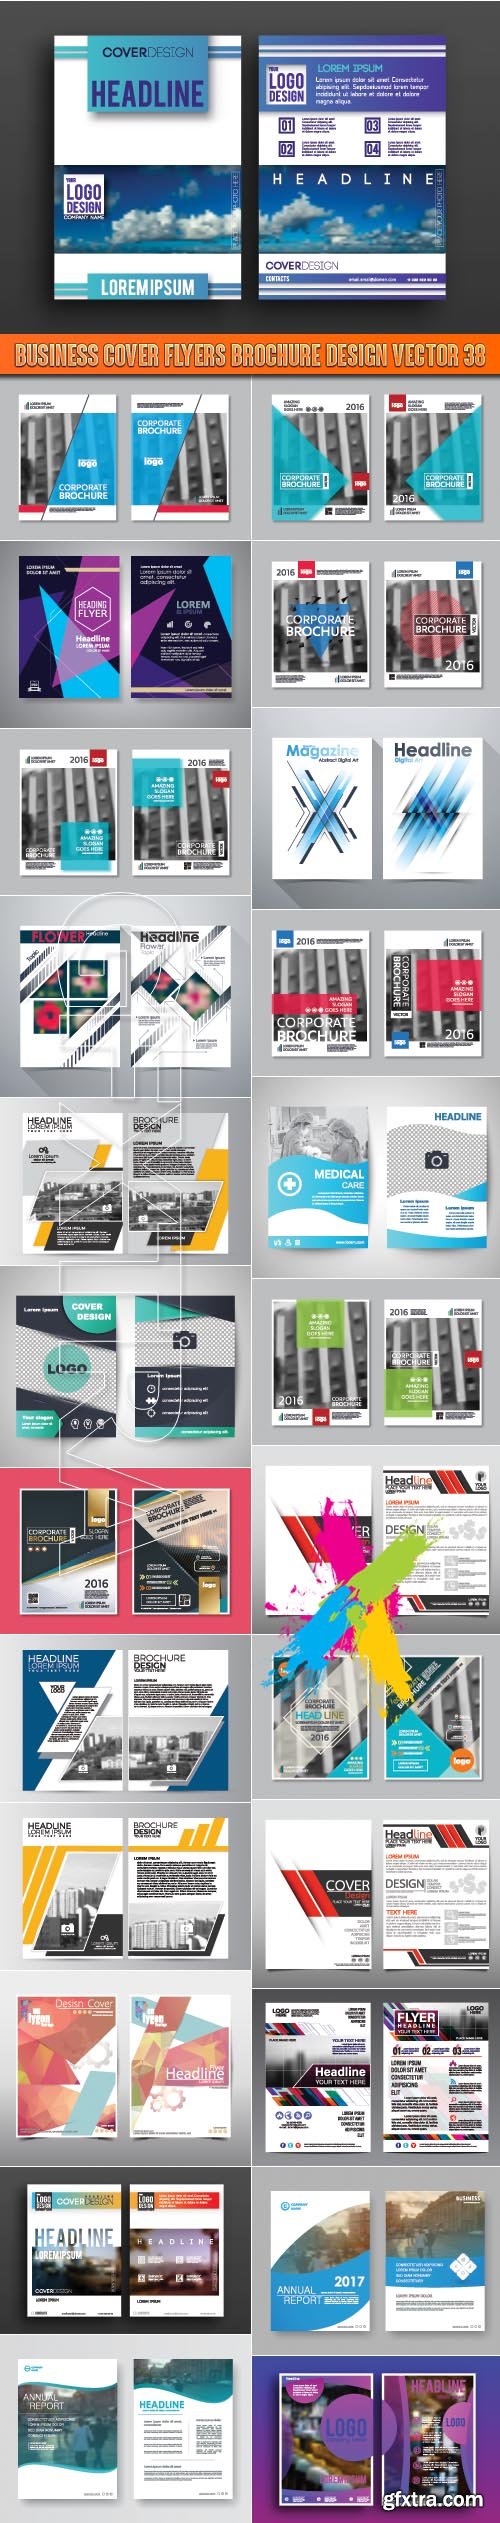 Business cover flyers brochure design vector 38